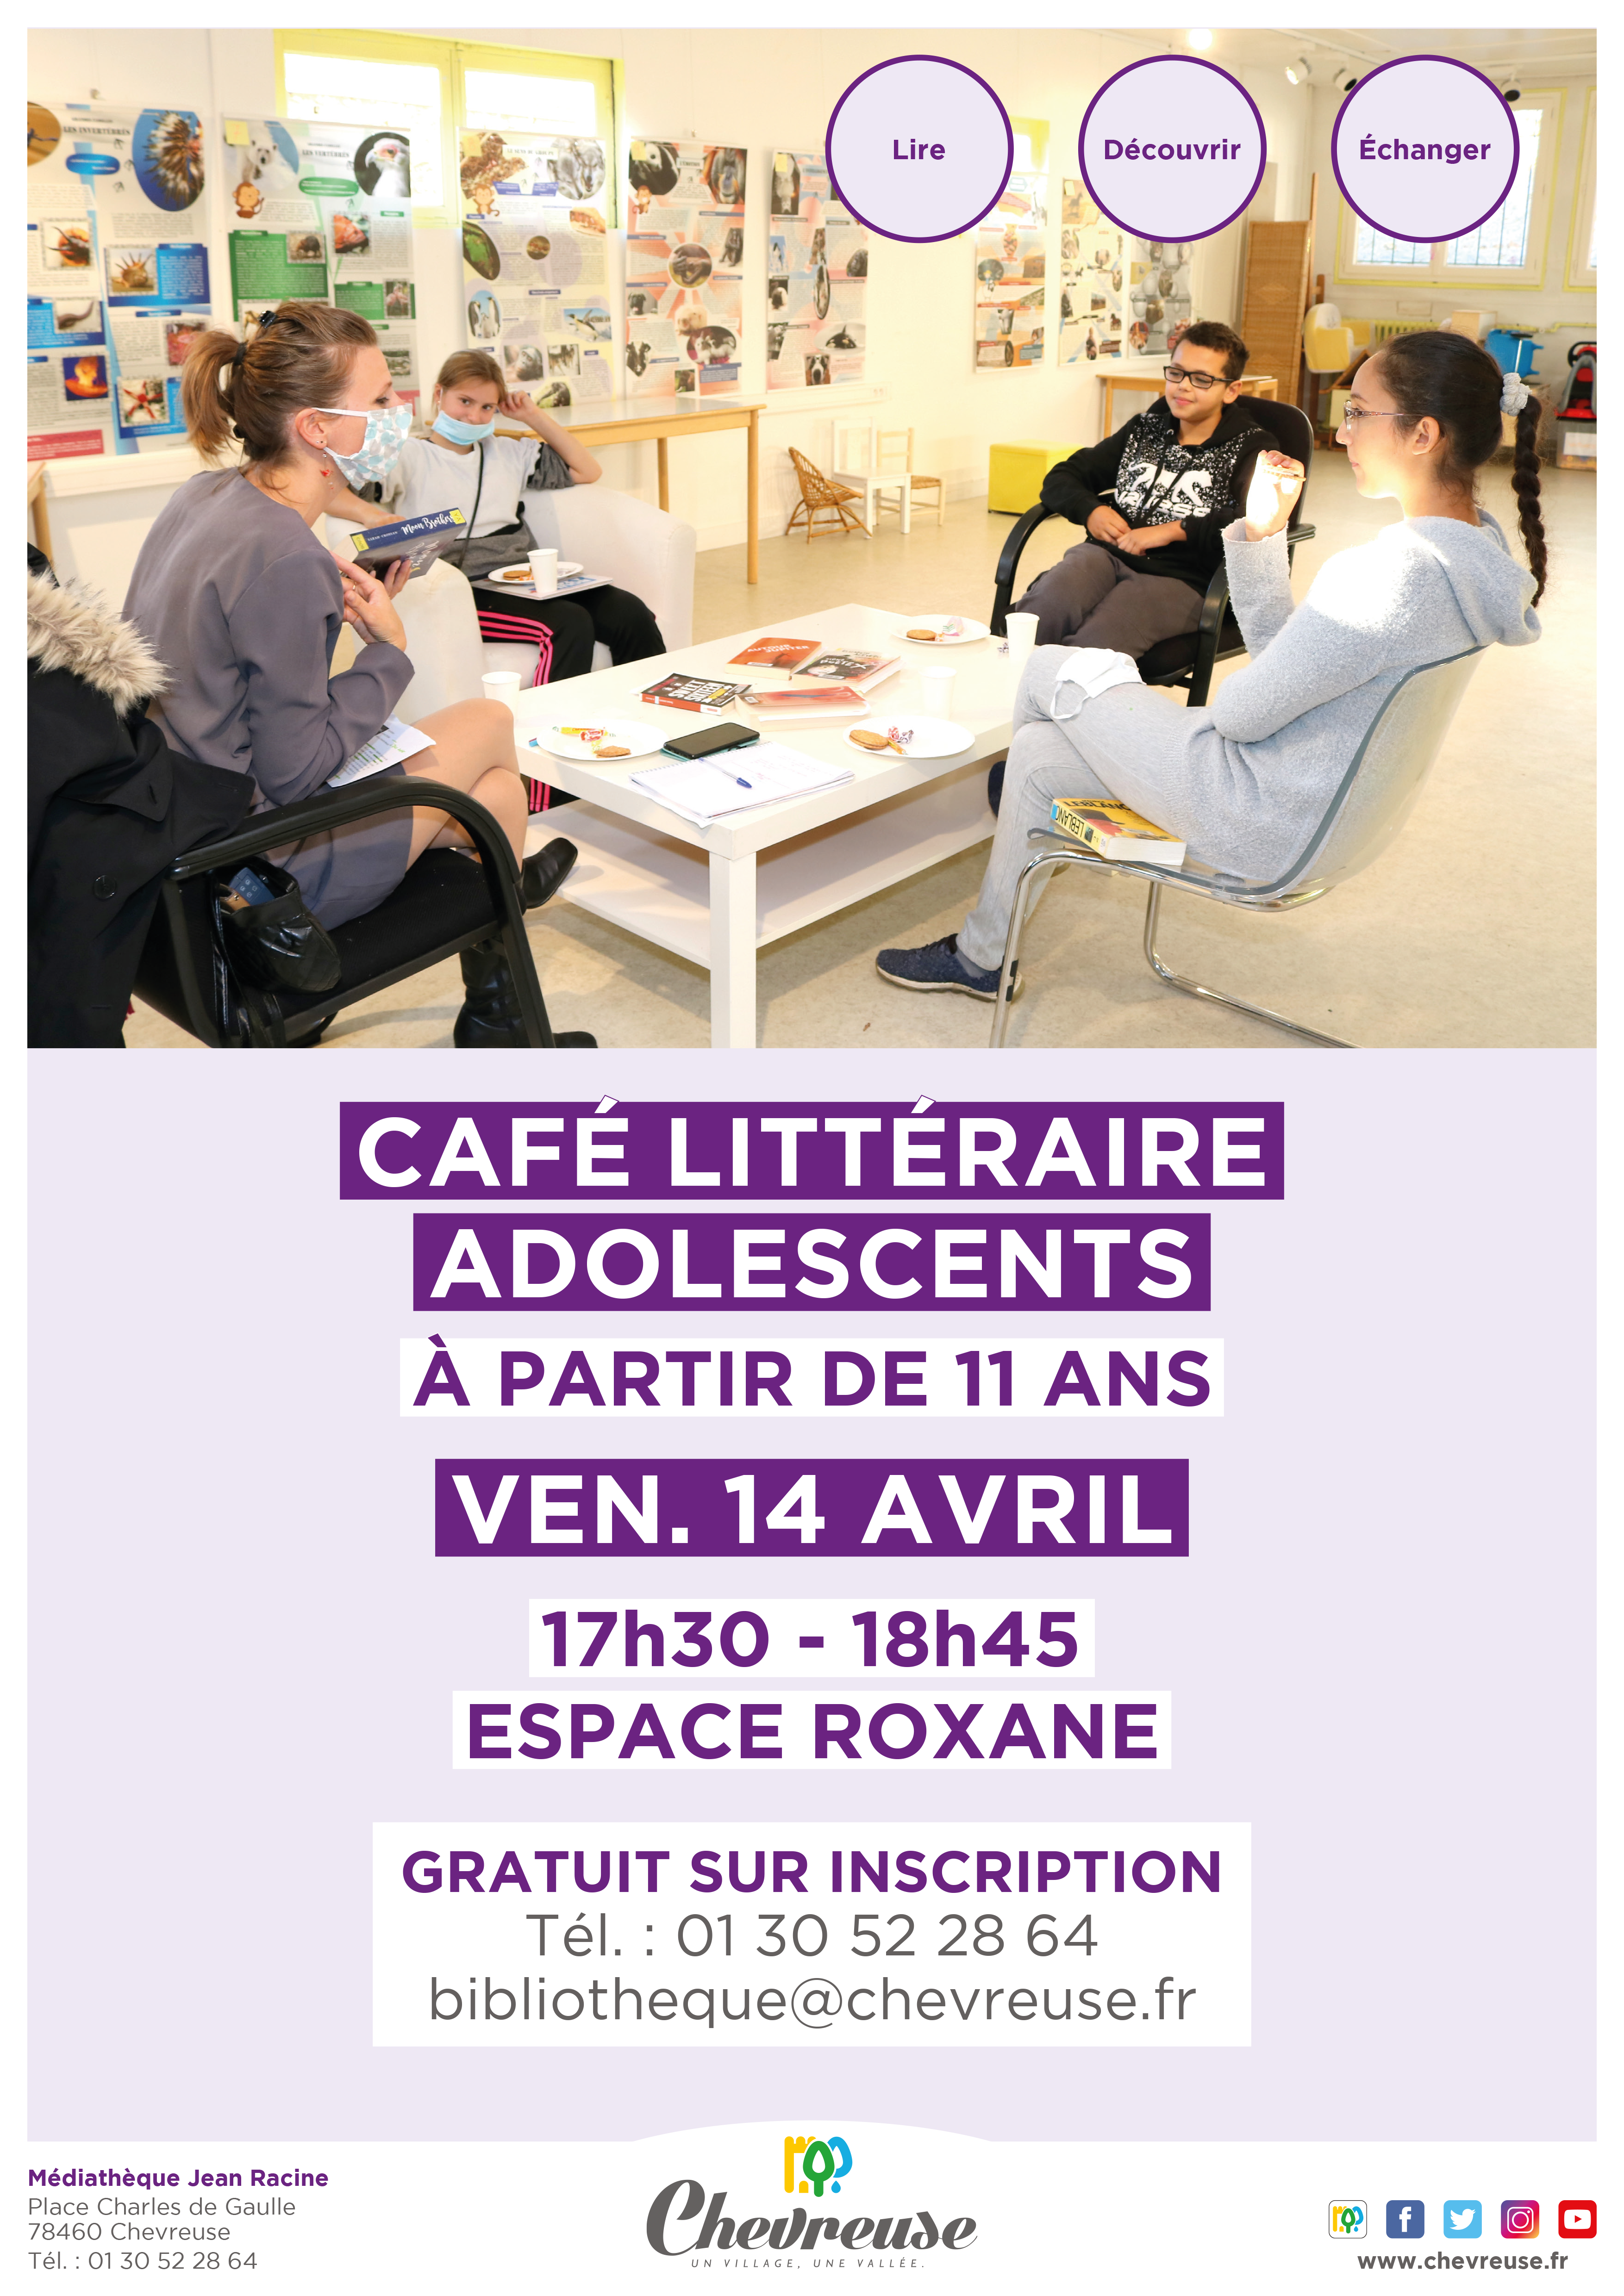 Café littéraire ados 2021 07 02 A3